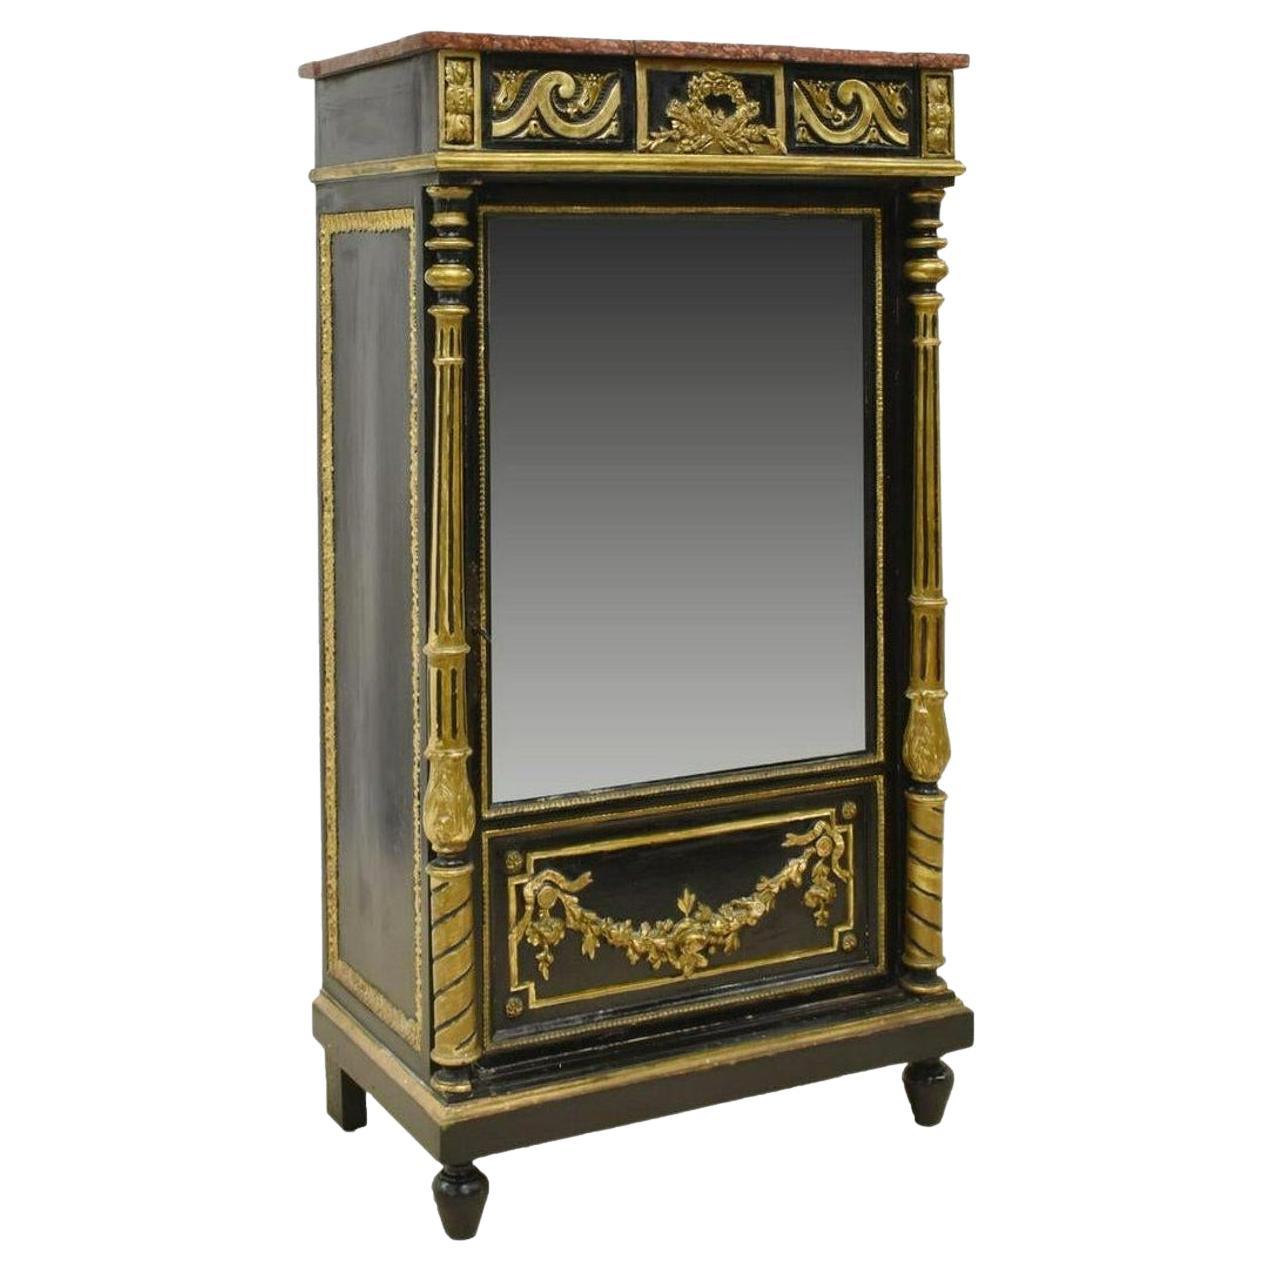 19th Century French Napoleon III Period Mirrored Cabinet